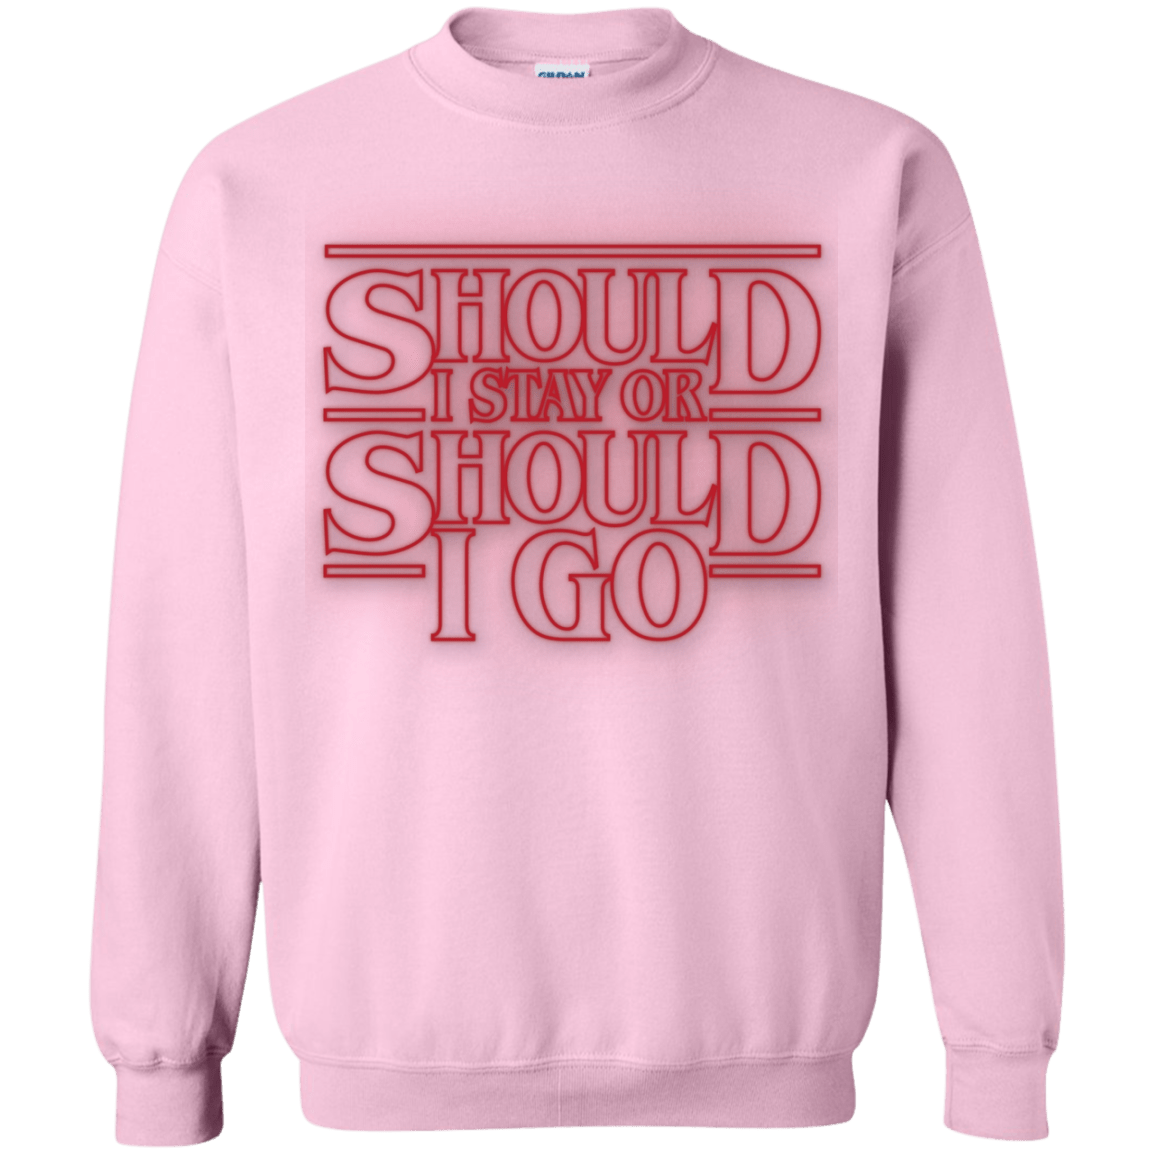 Sweatshirts Light Pink / Small Should I Stay Or Should I Go Crewneck Sweatshirt